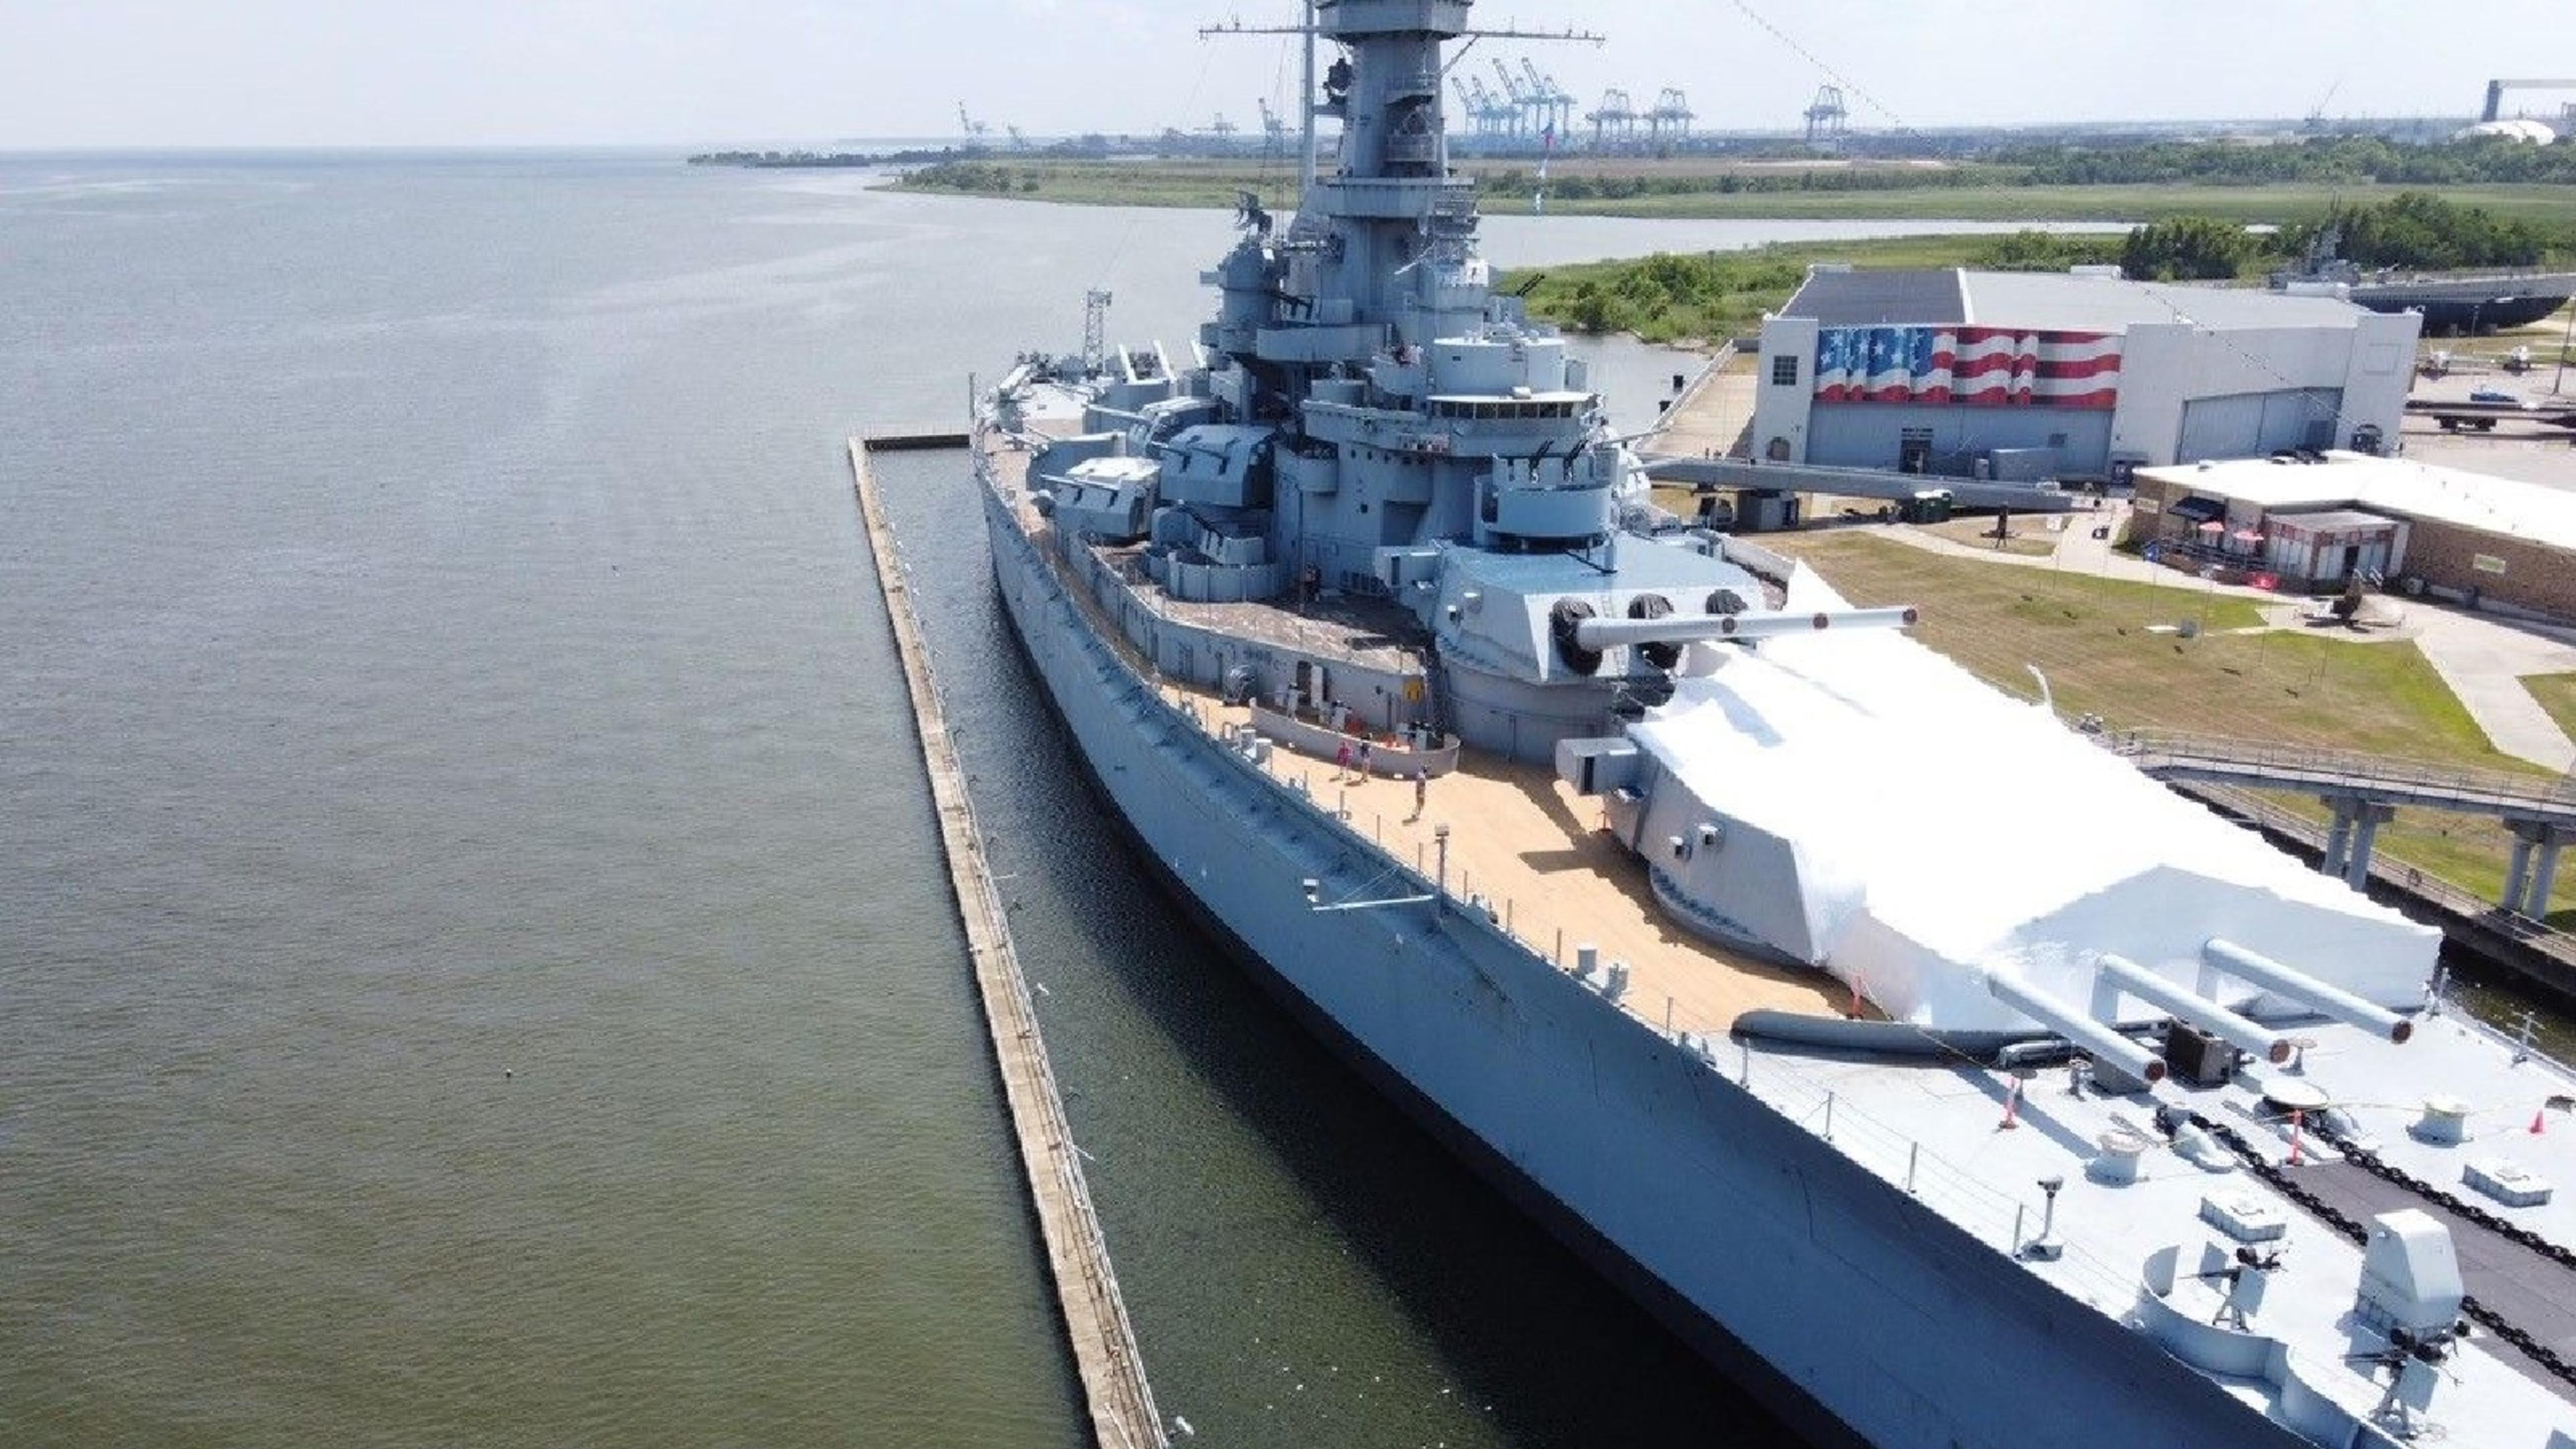 an aerial view of the USS Alabama battleship museum